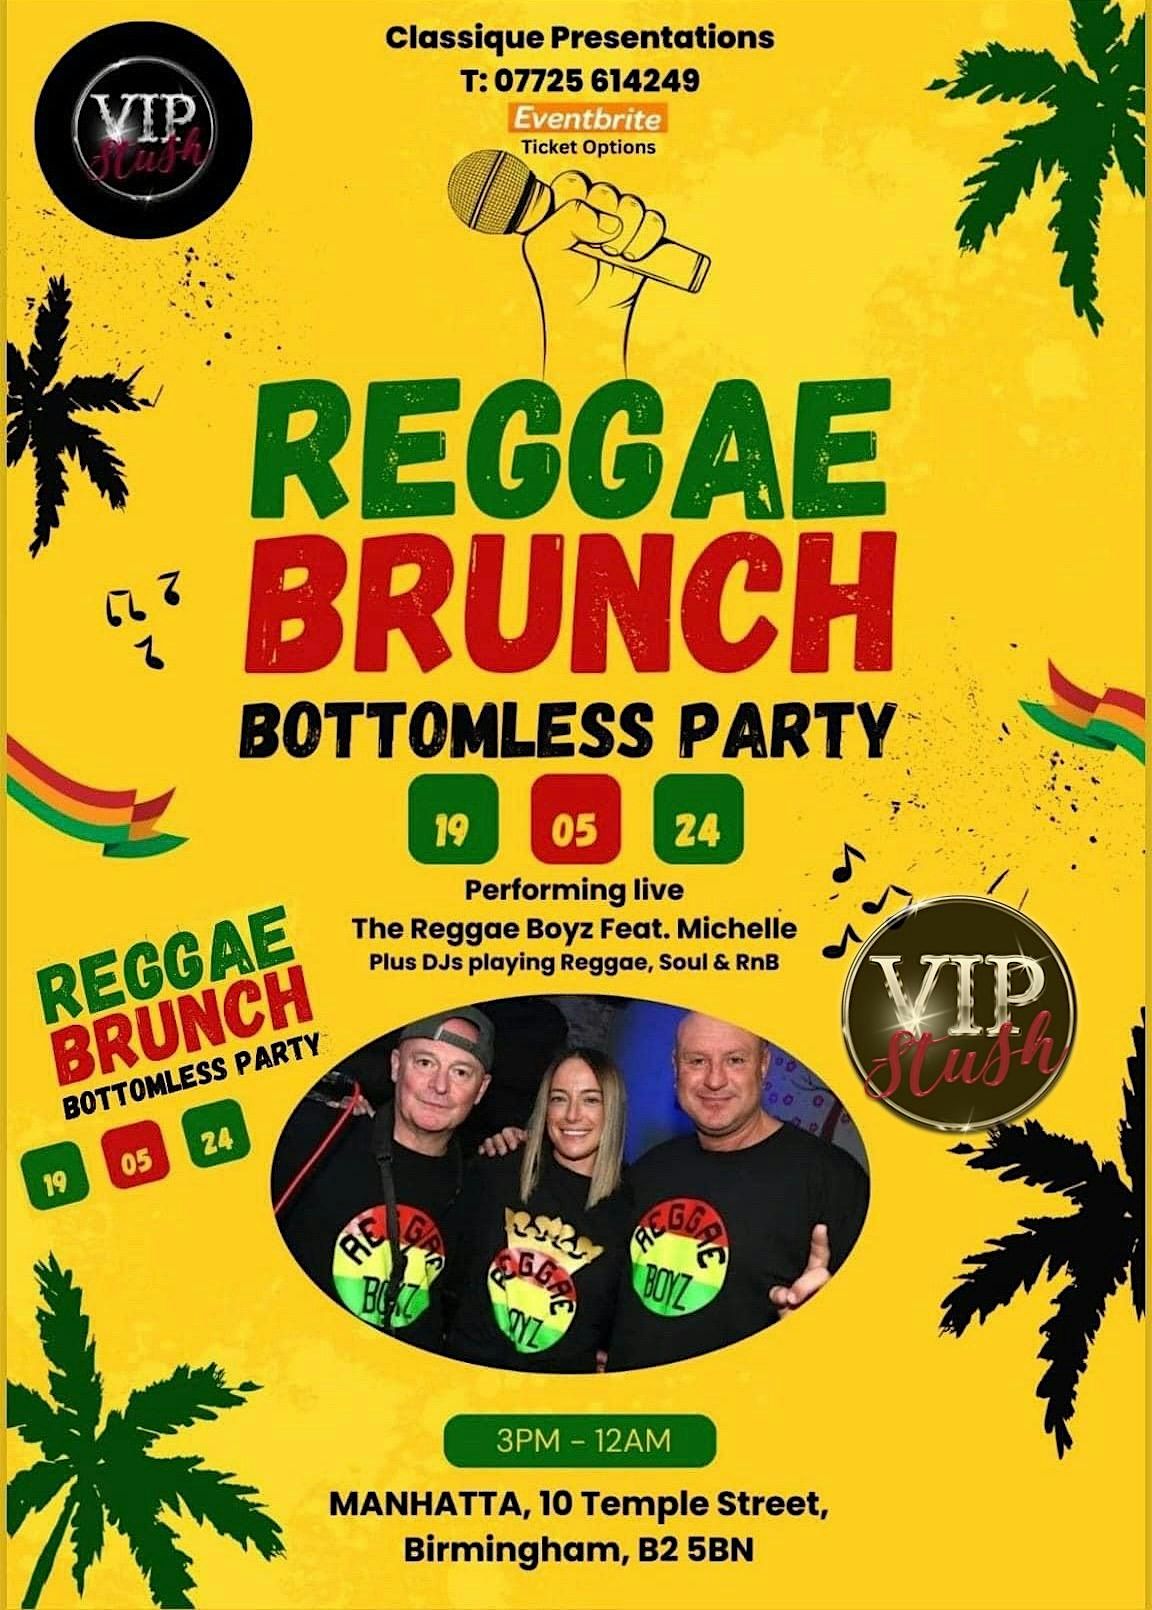 VIP STUSH REGGAE BRUNCH: The Reggae Boyz Feat. Michelle